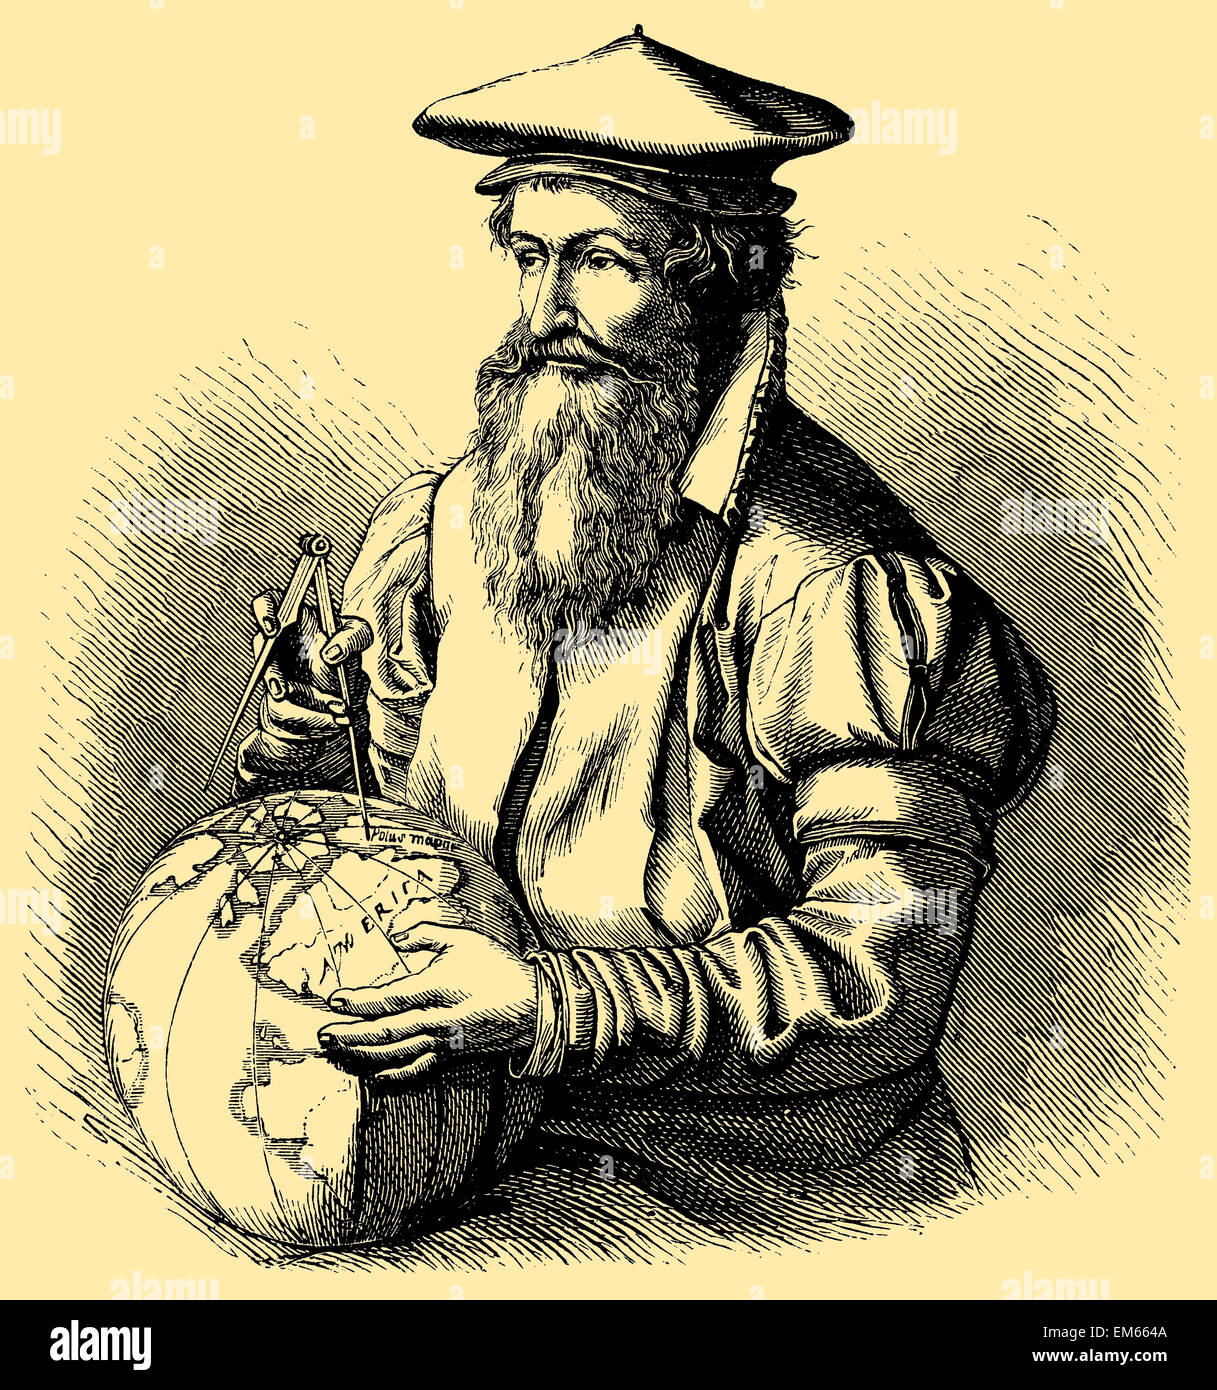 Gerardus Mercator, un 16e siècle cartographe flamand Banque D'Images